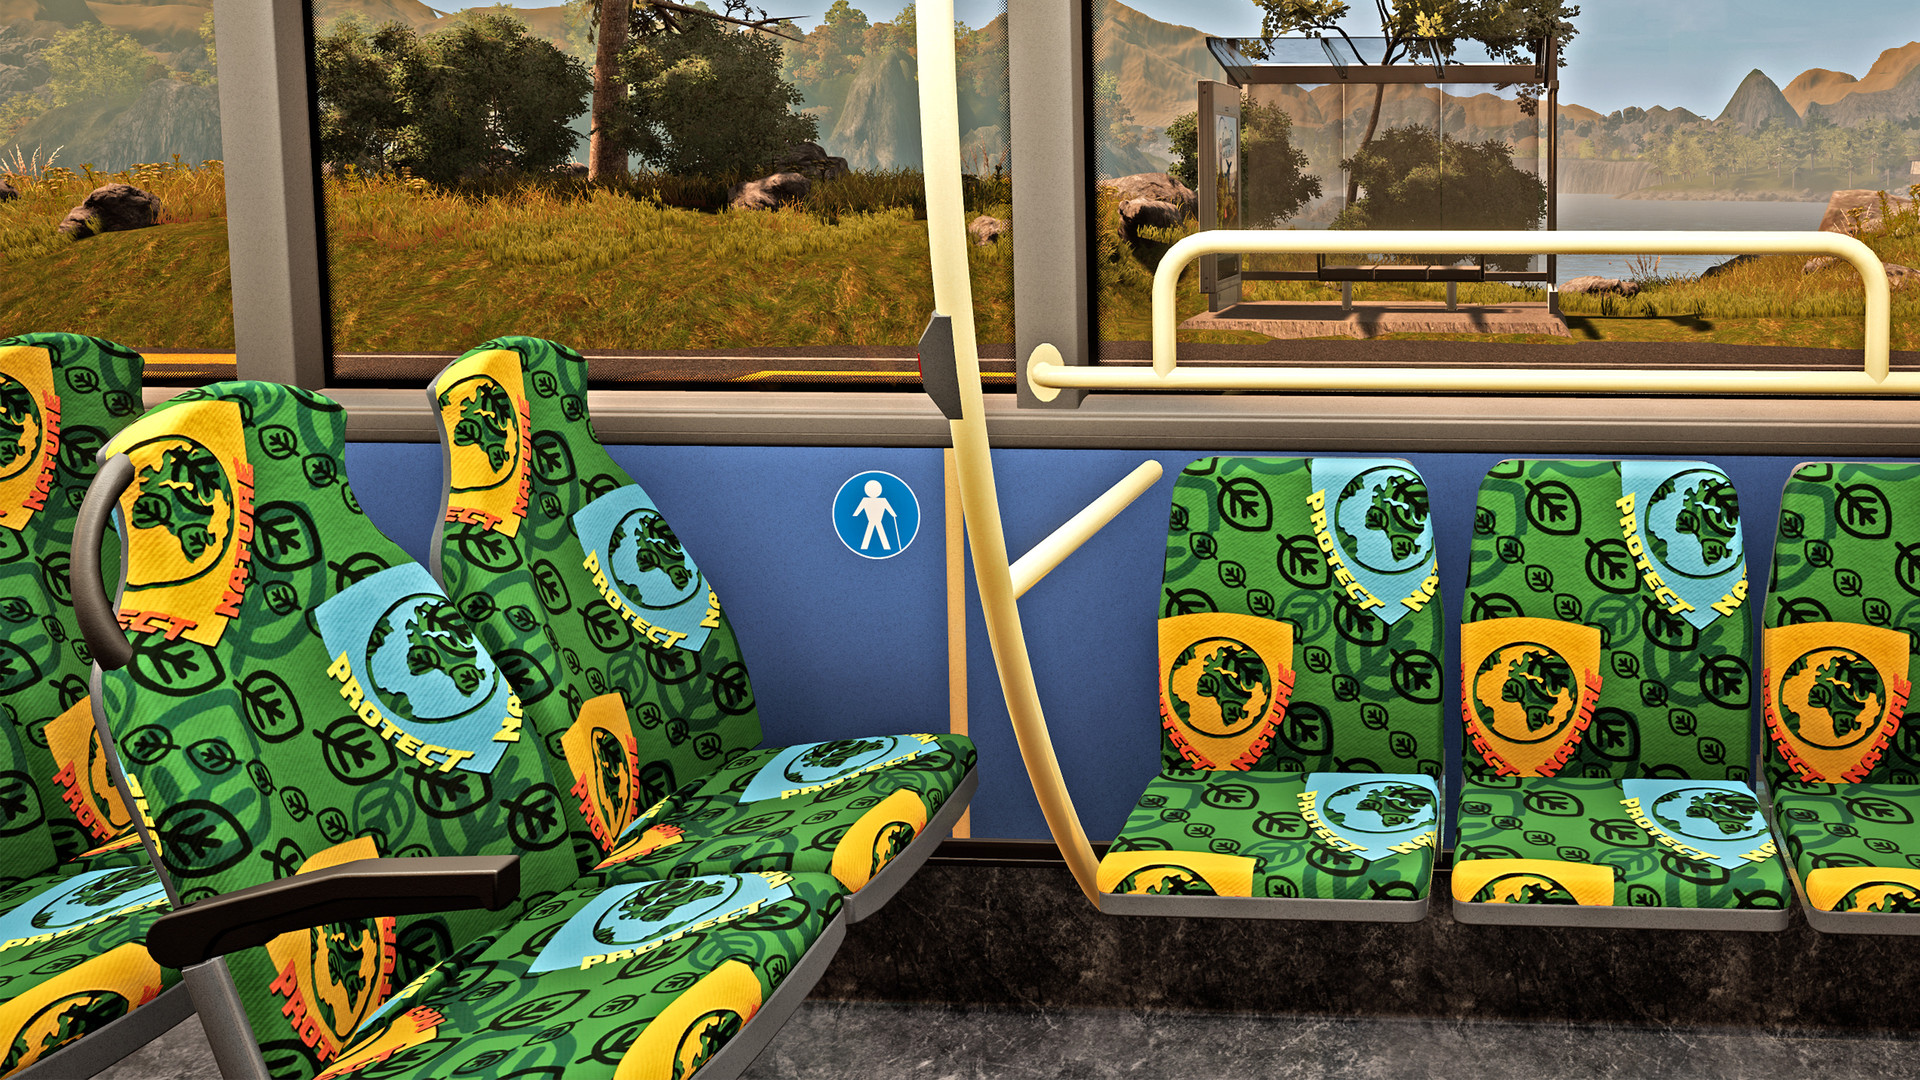 Bus Simulator 21 - Protect Nature Interior Pack